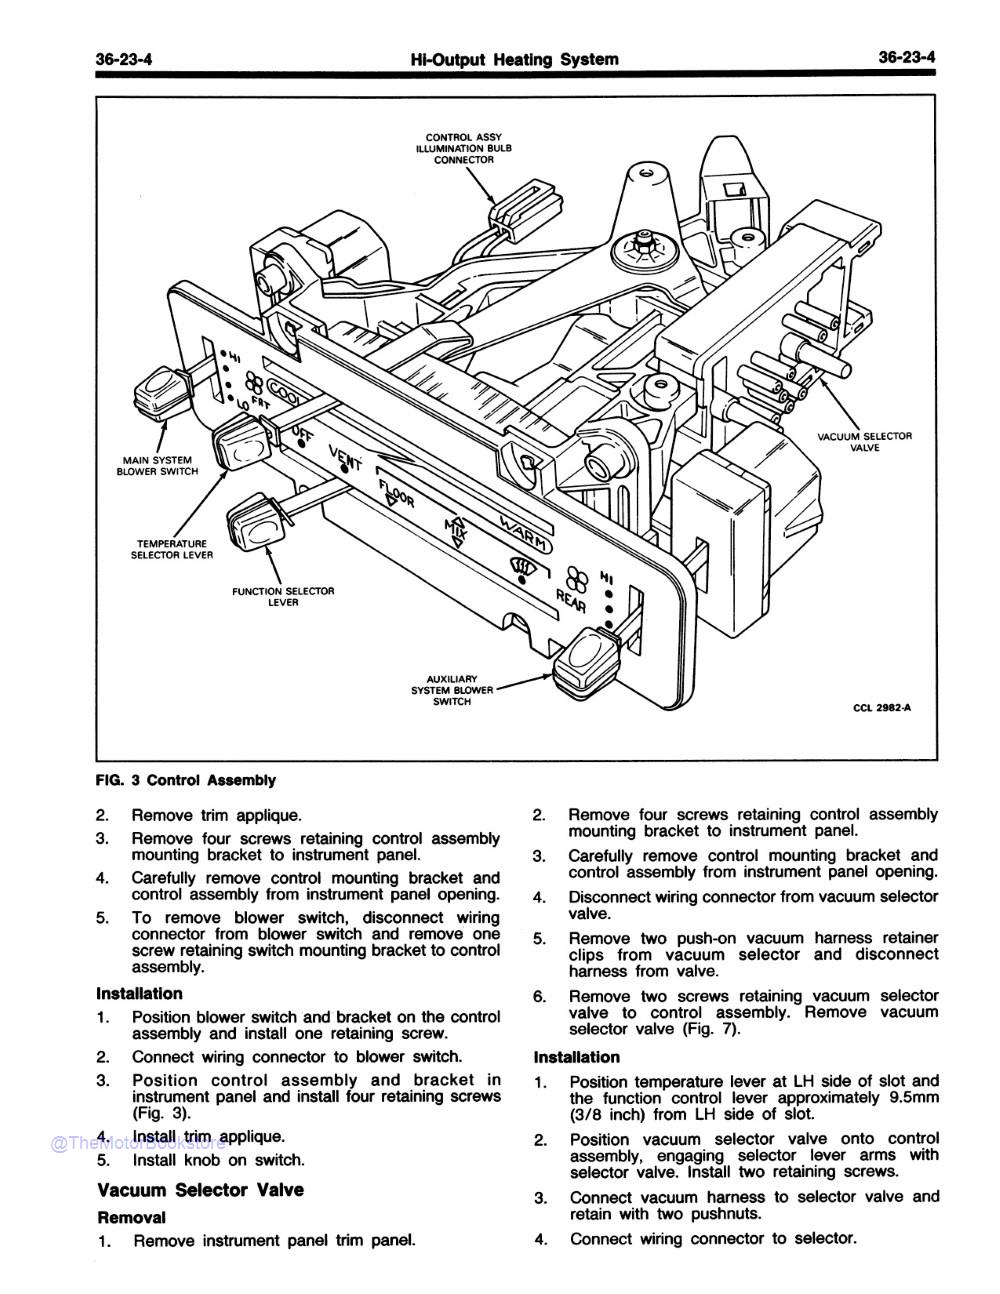 1989 Ford F-150-350 Truck, Bronco, E-150-350 Vans, & F-Super Duty Shop Manuals - Sample Page 6